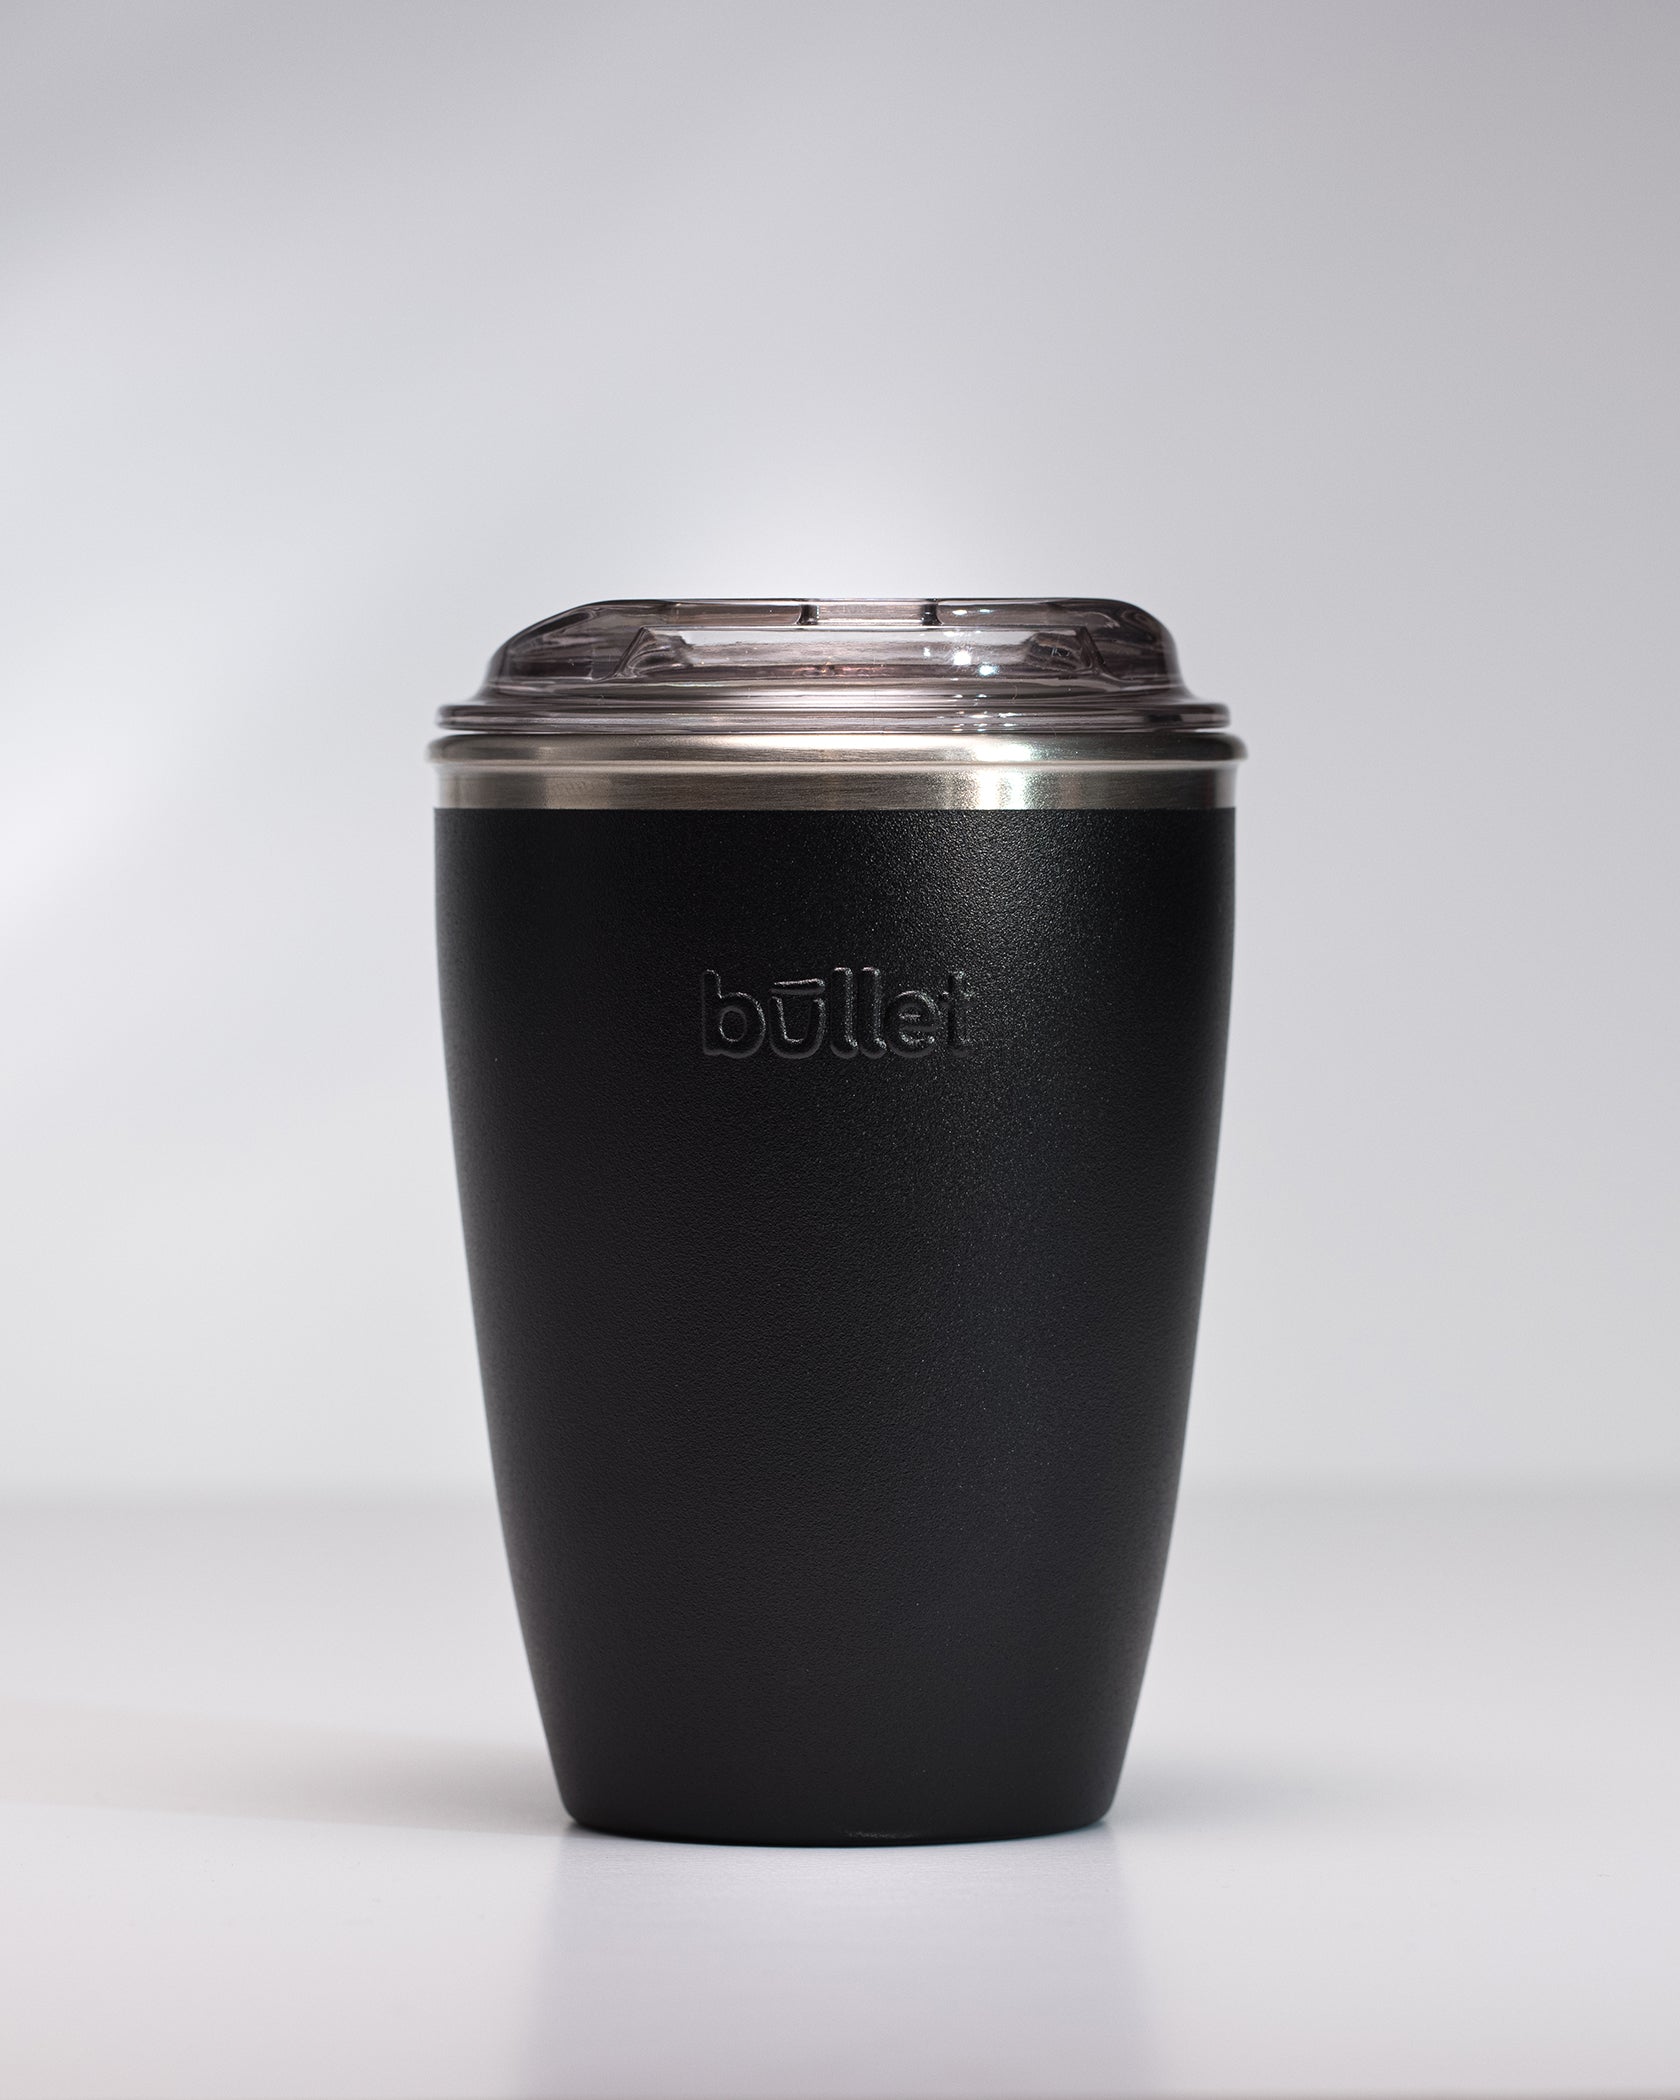 8oz black reusable coffee cup